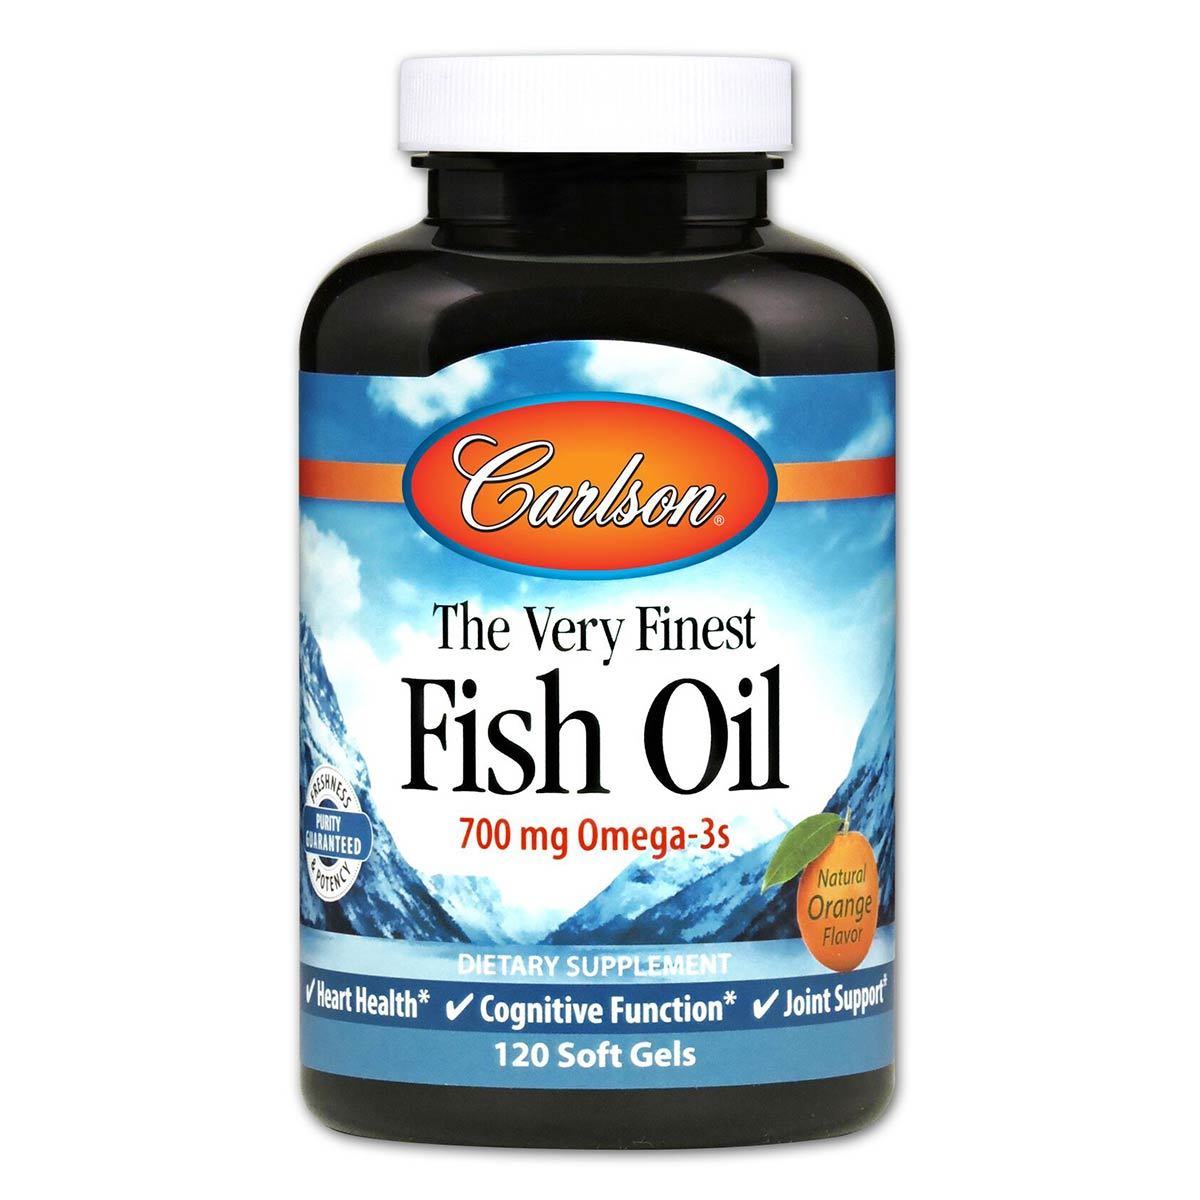 Primary image of Very Finest Fish Oil - Orange